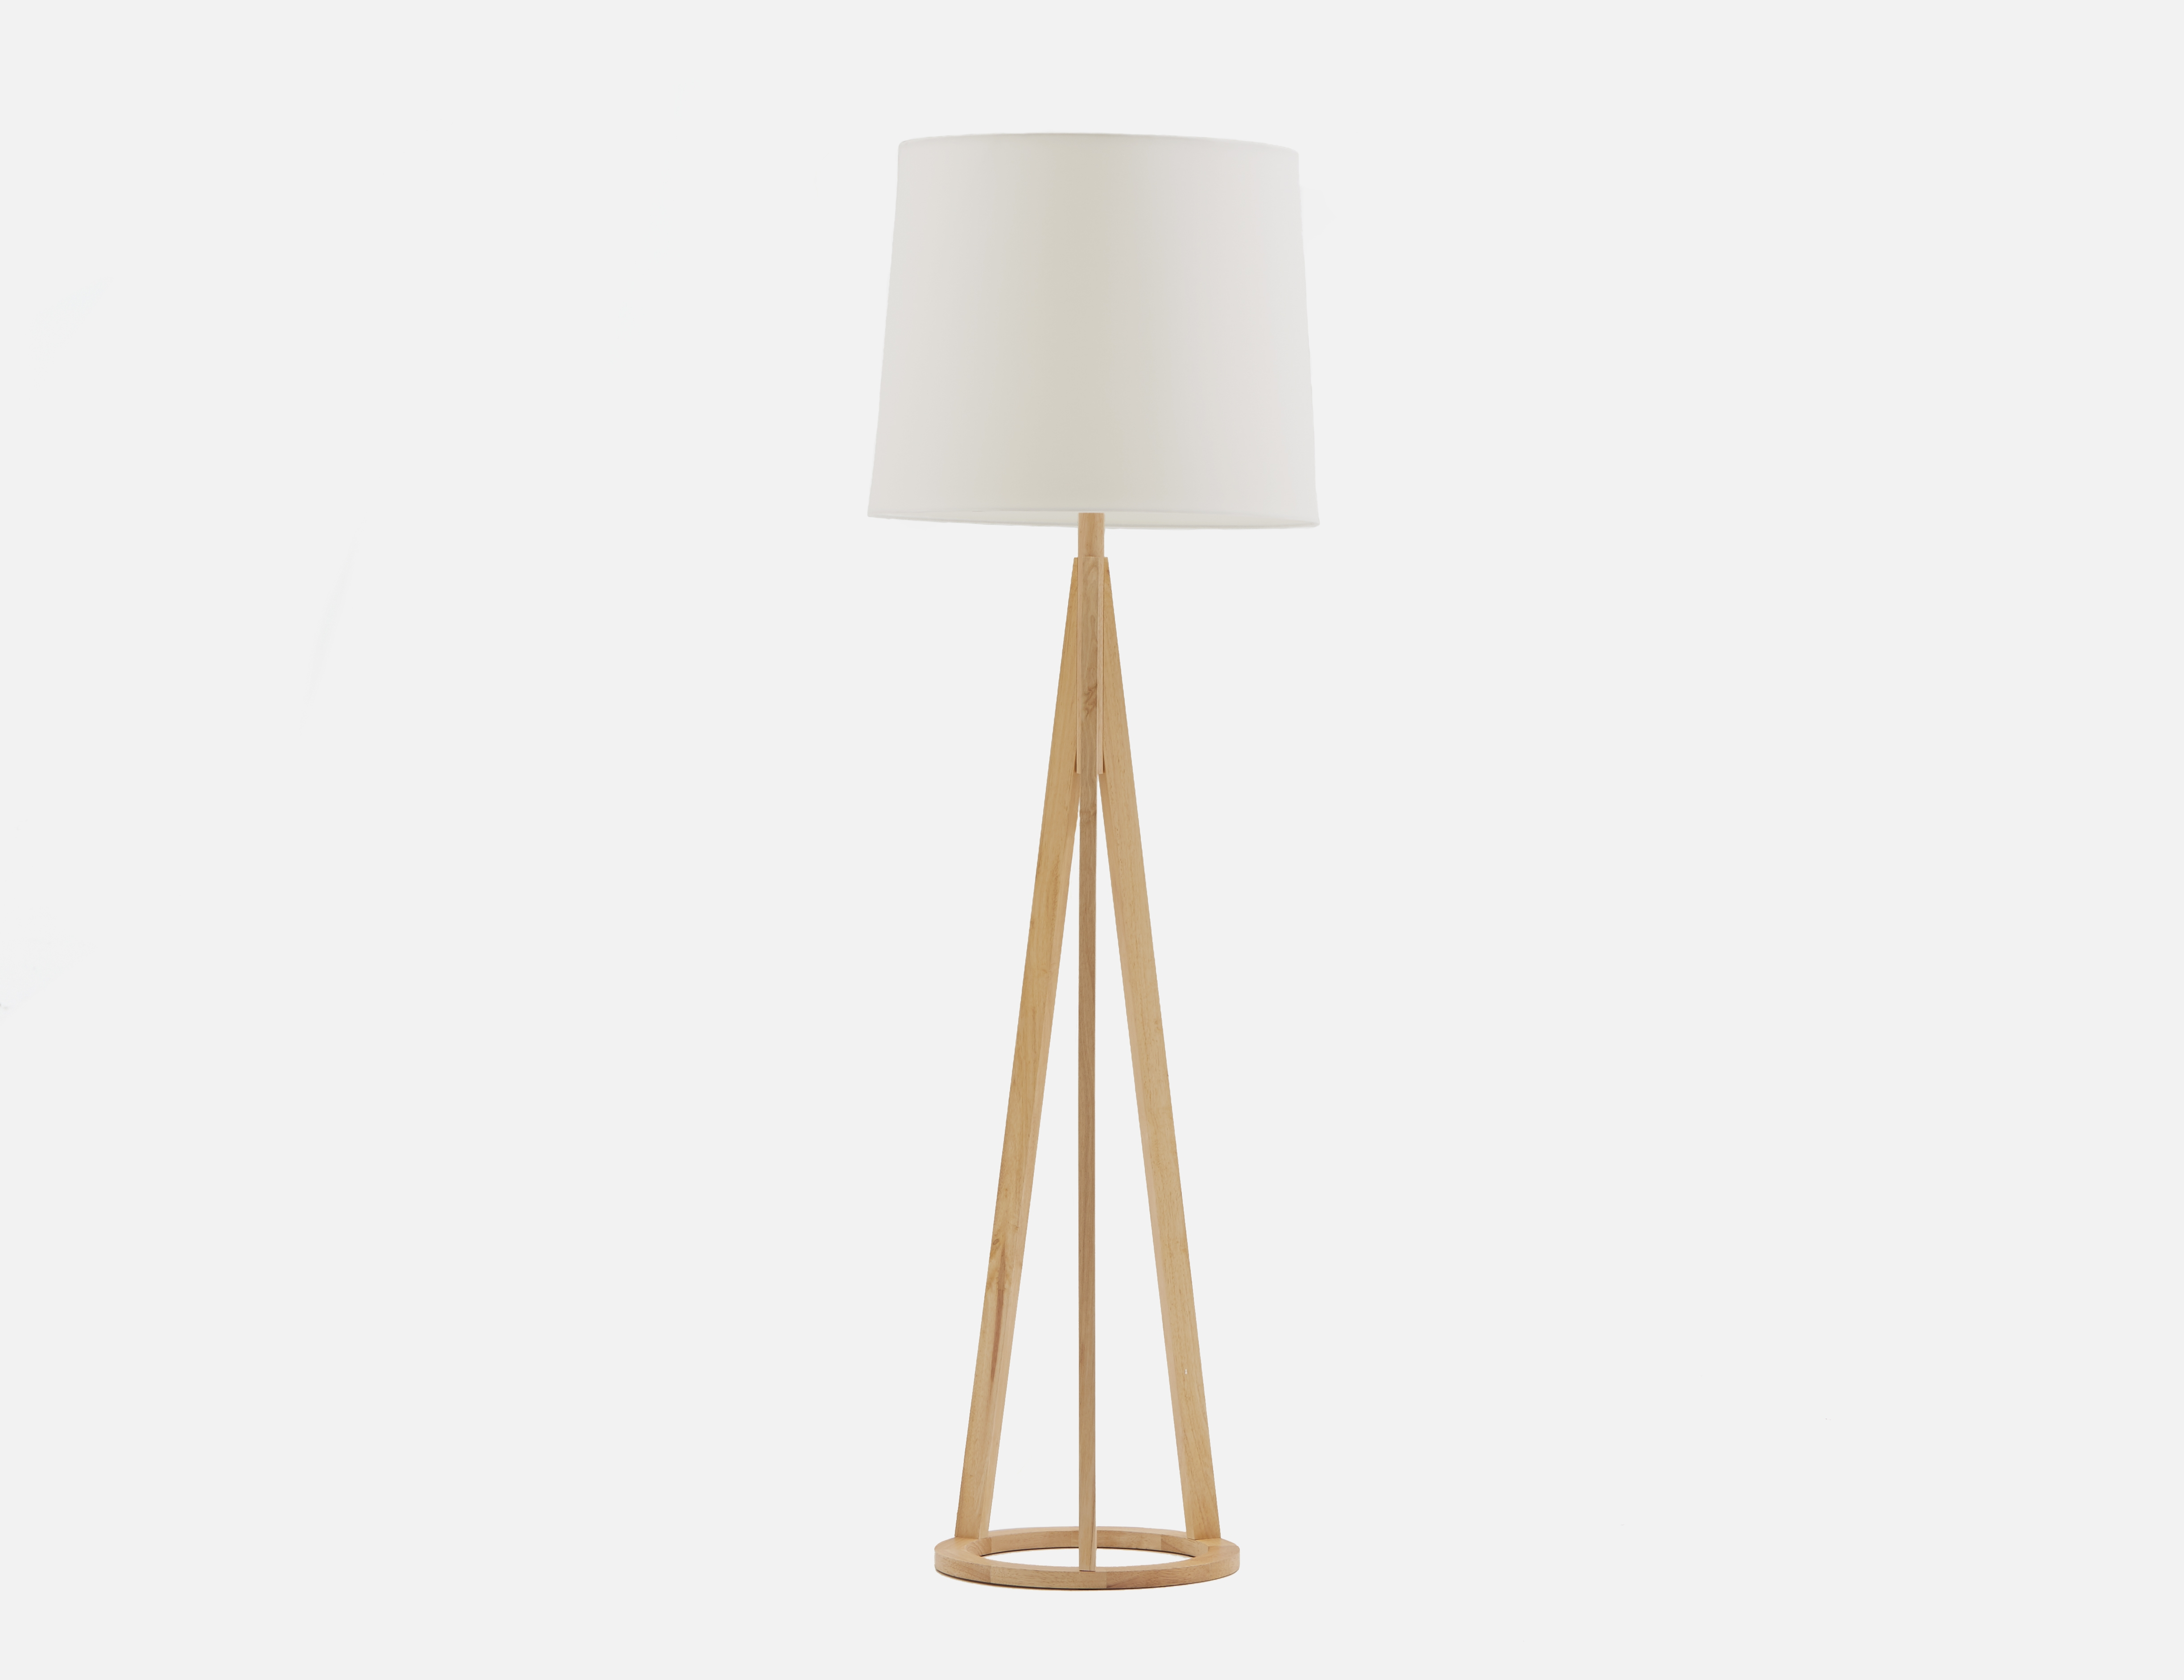 Bimini White And Natural Floor Lamp 160cm Height Structu in dimensions 4897 X 3767